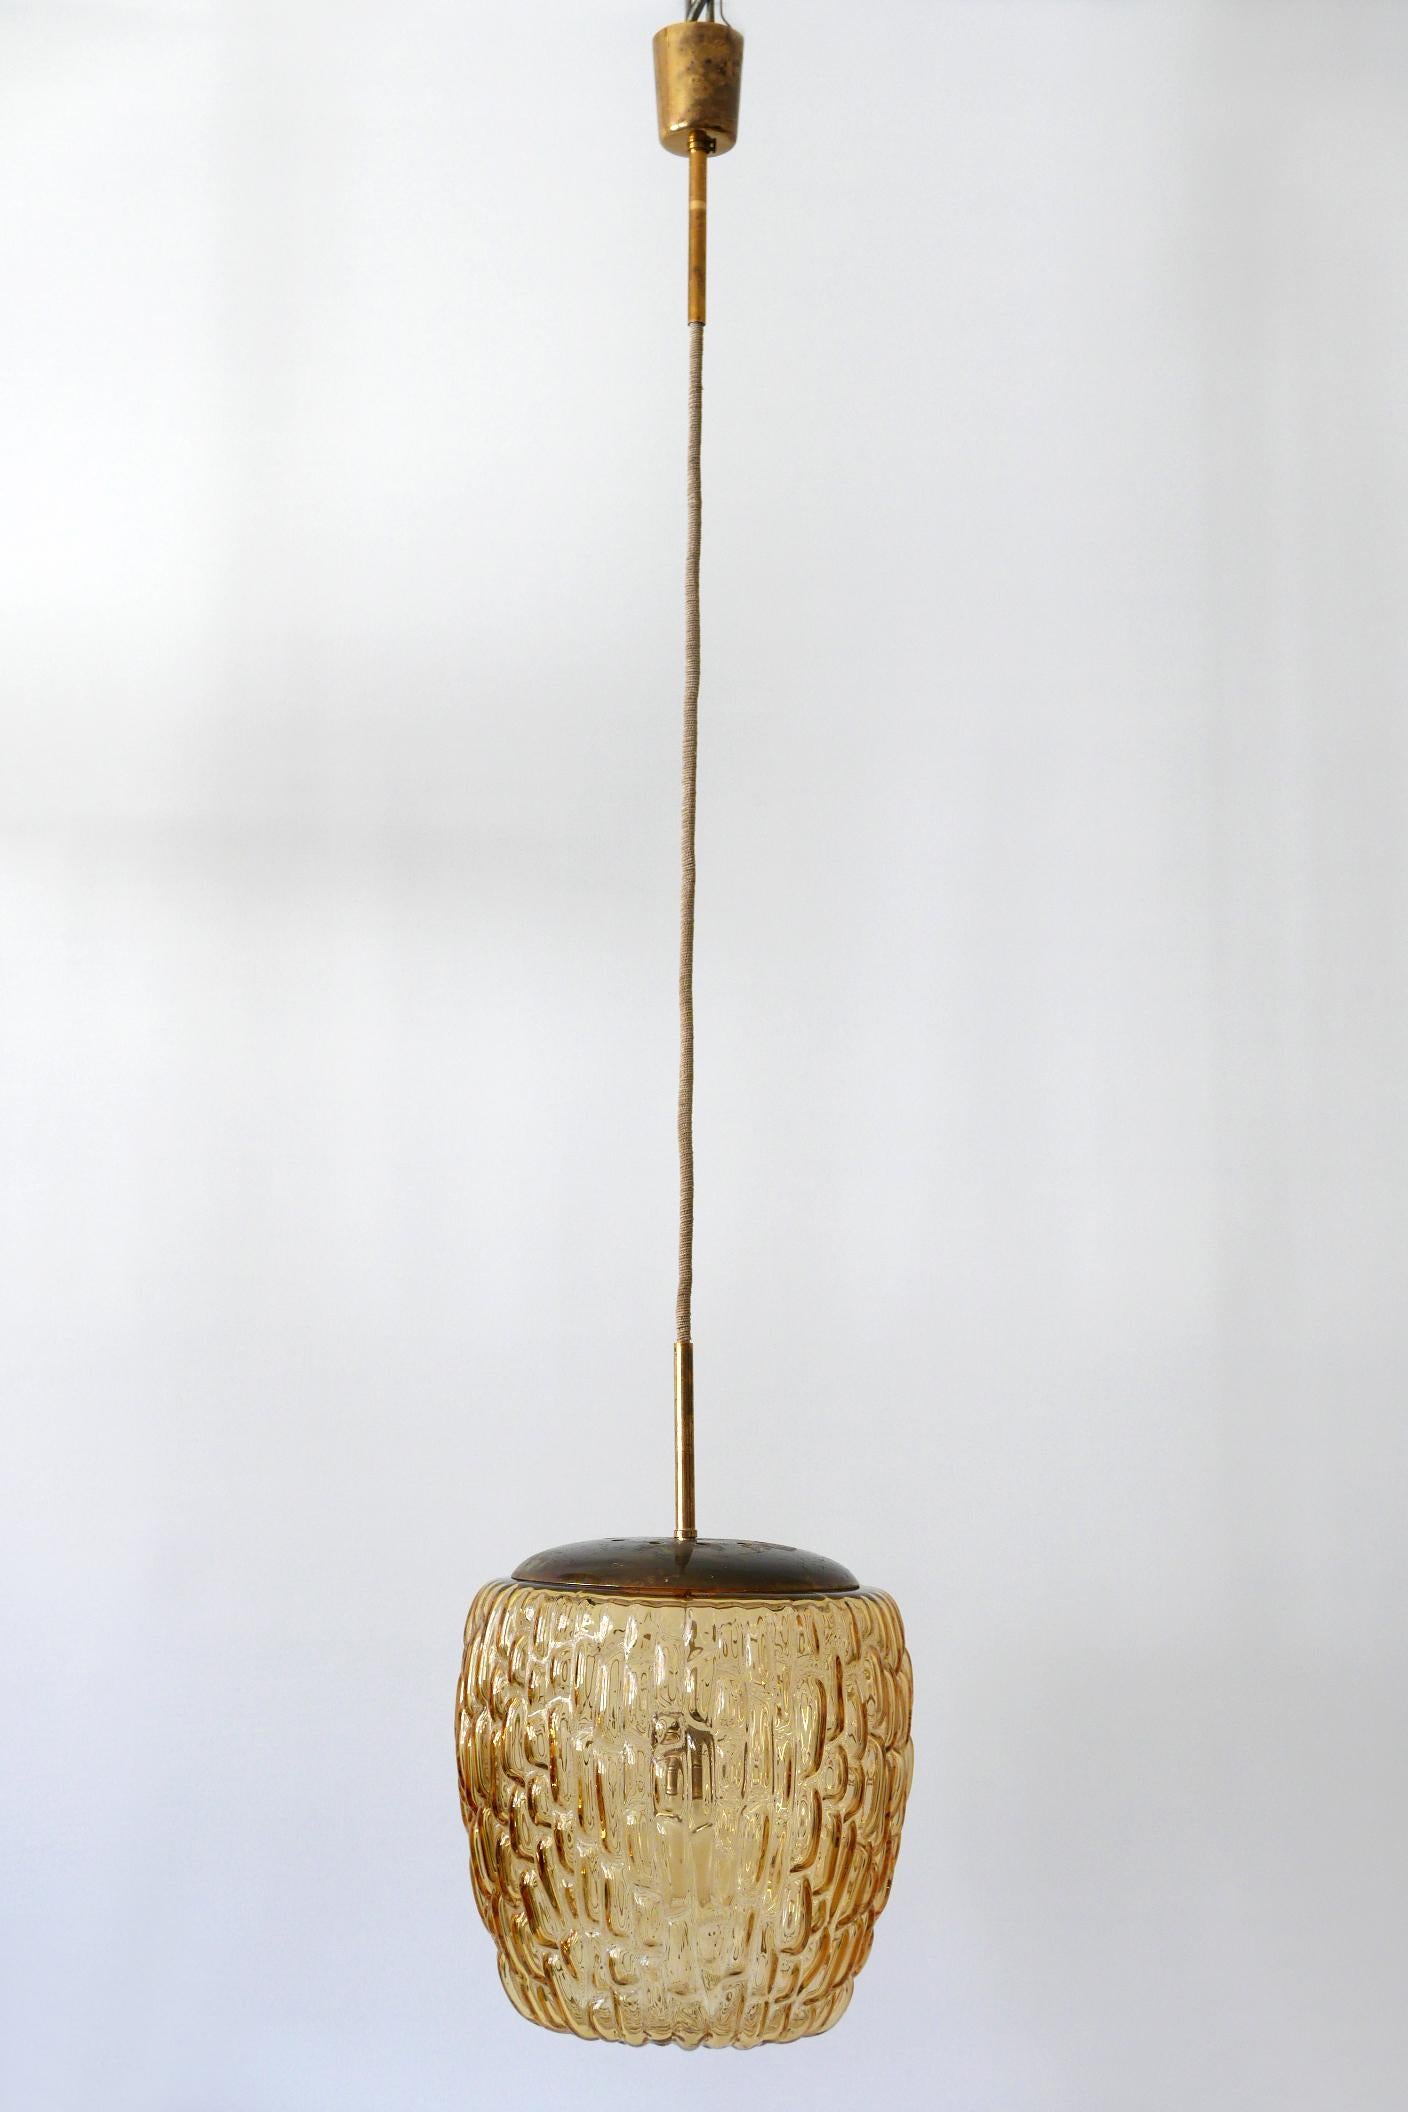 Austrian Mid-Century Modern Textured Glass Pendant Lamp by Rupert Nikoll, 1950s, Austria For Sale